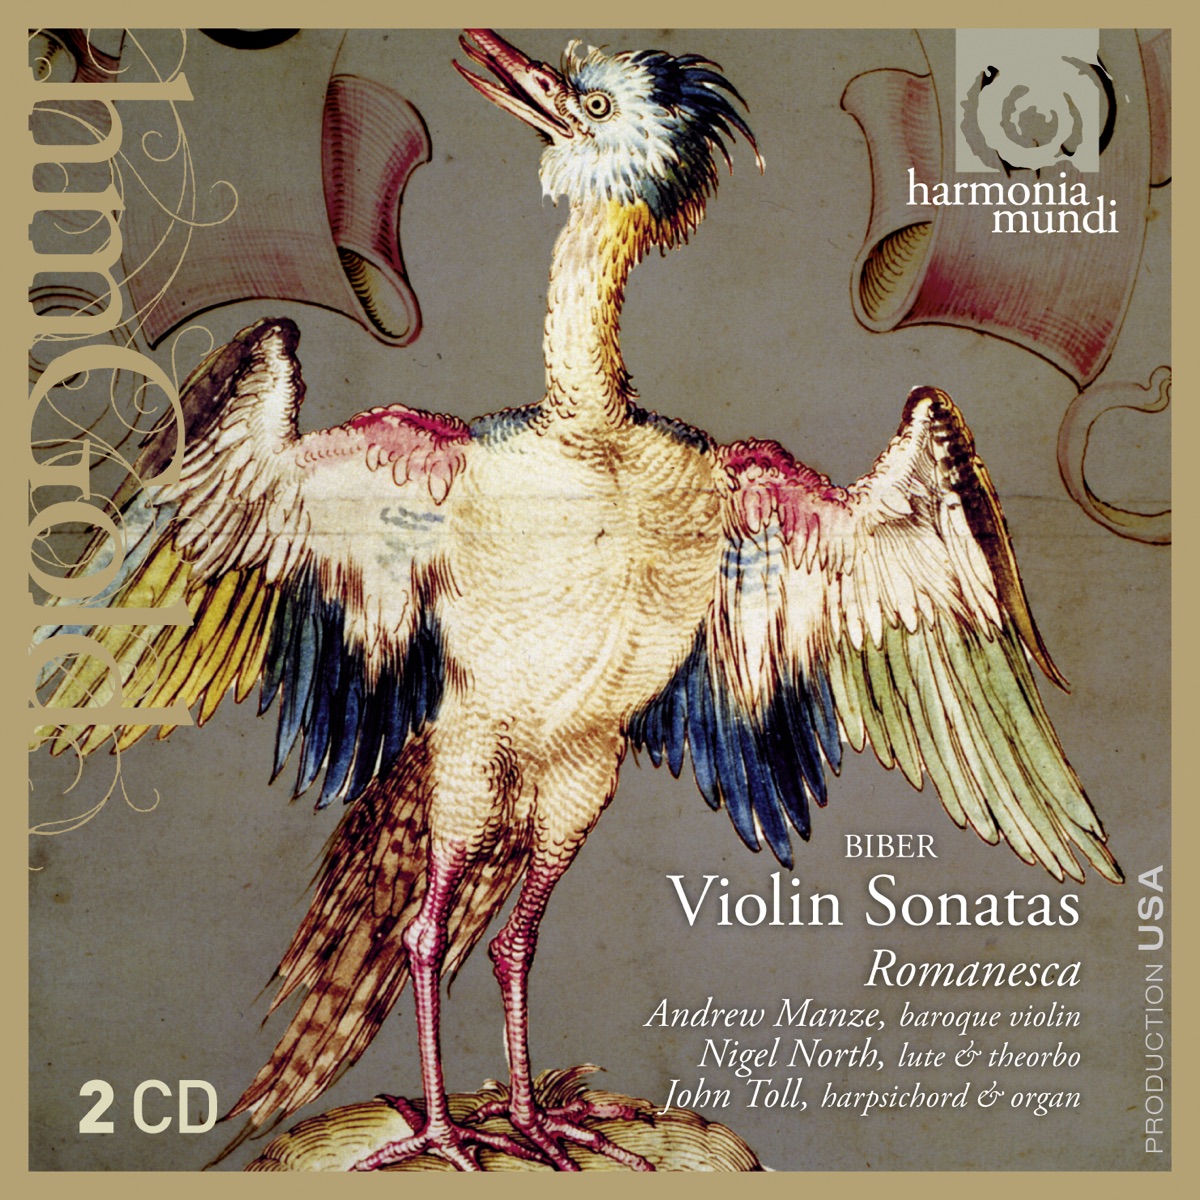 Biber: Violin Sonatas - Album by Romanesca - Apple Music